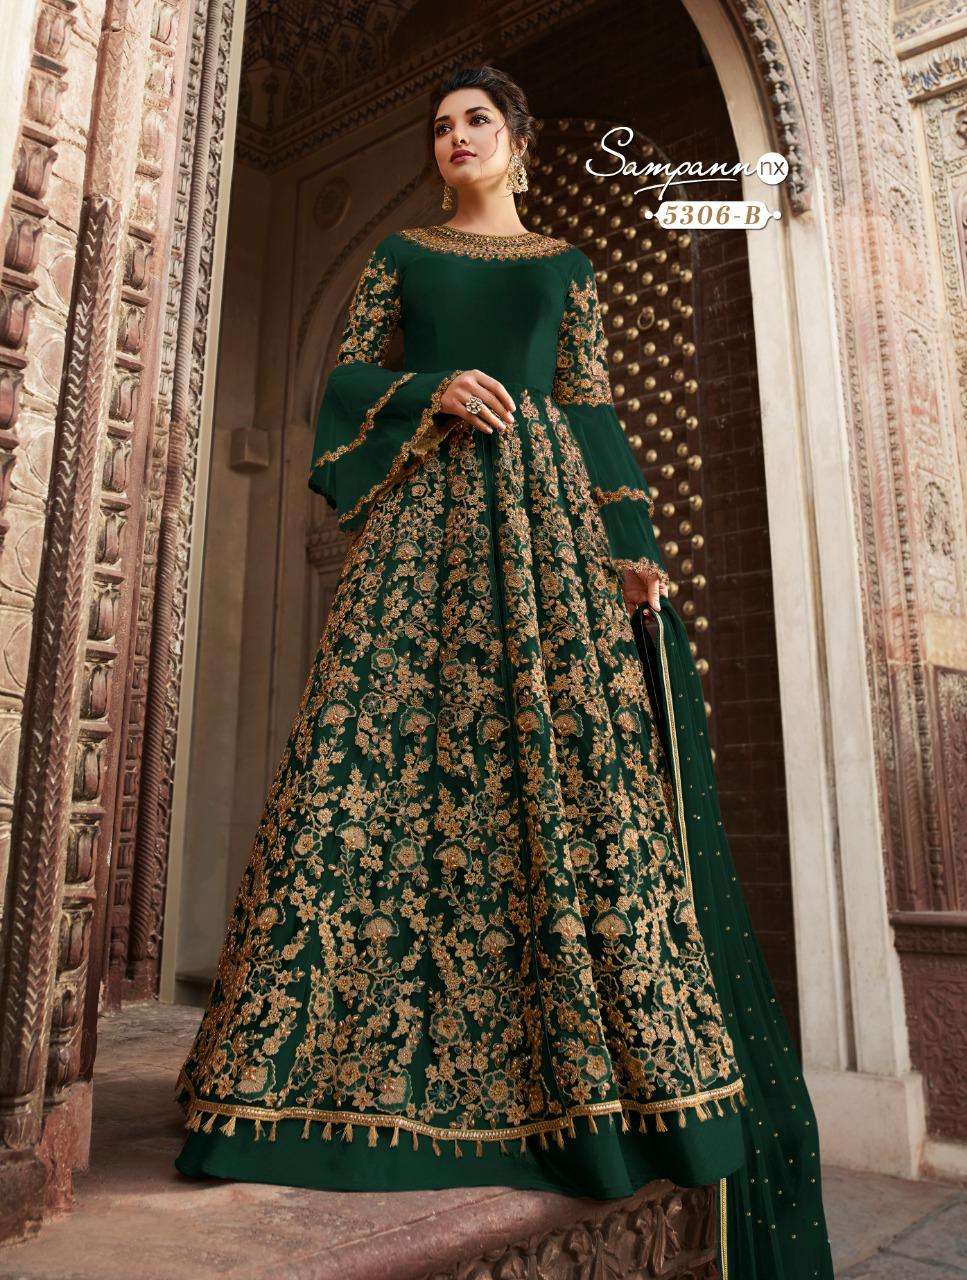 Saga 5306 Colours By Sampann Nx 5306 To 5306-b Series Anarkali Designer Beautiful Suits Colorful Stylish Fancy Casual Wear & Ethnic Wear Net/tafeta Dresses At Wholesale Price